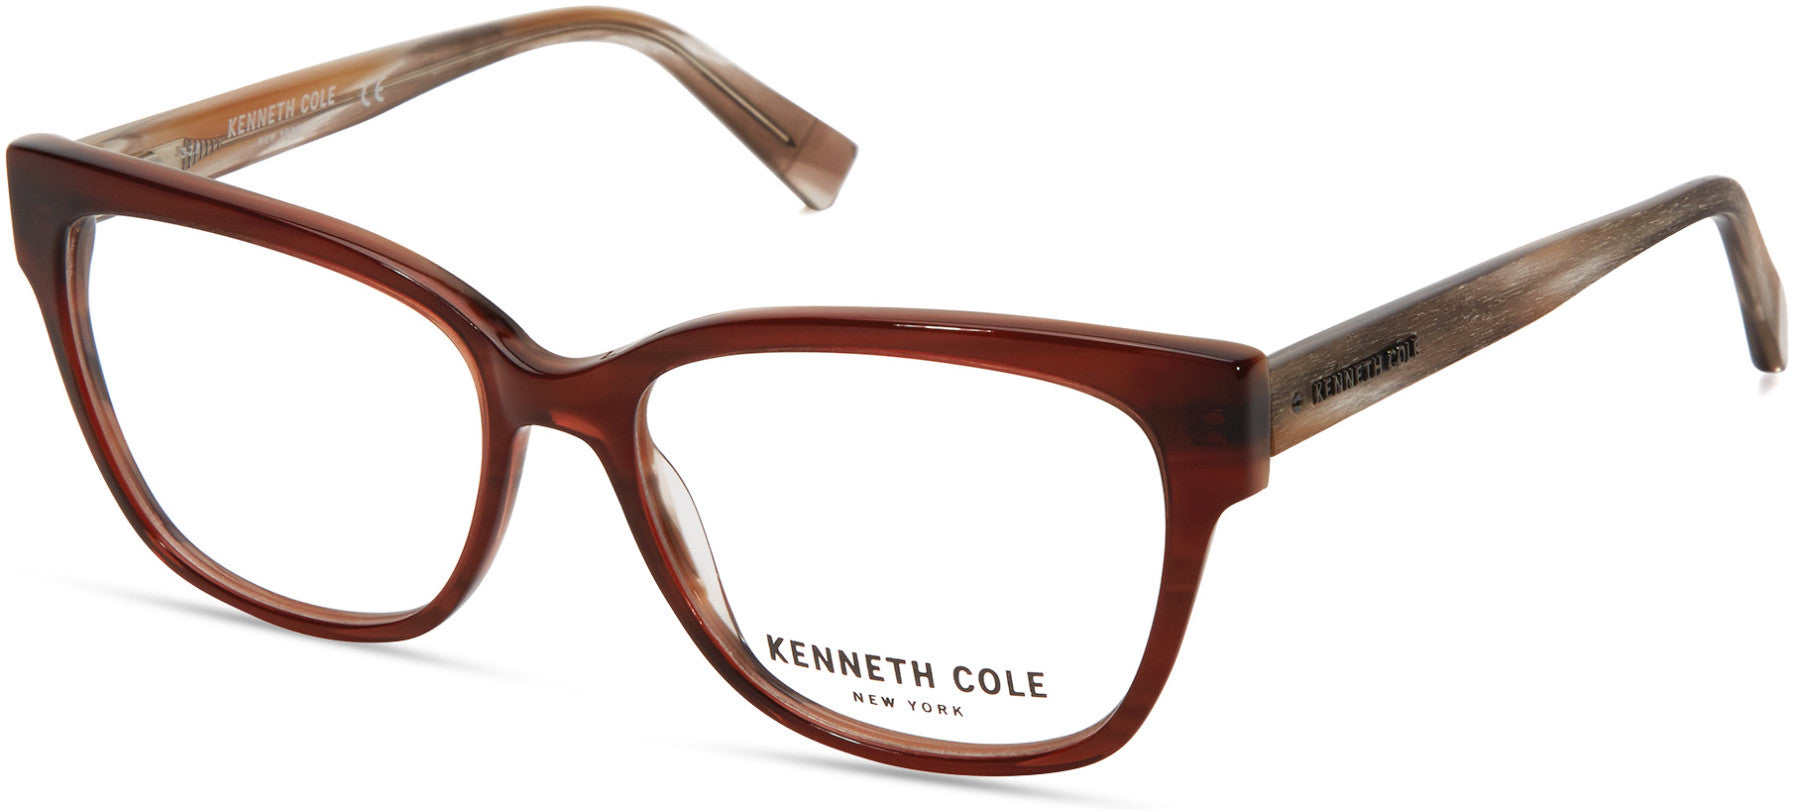 Kenneth Cole New York,Kenneth Cole Reaction KC0296 Geometric Eyeglasses 049-049 - Matte Dark Brown